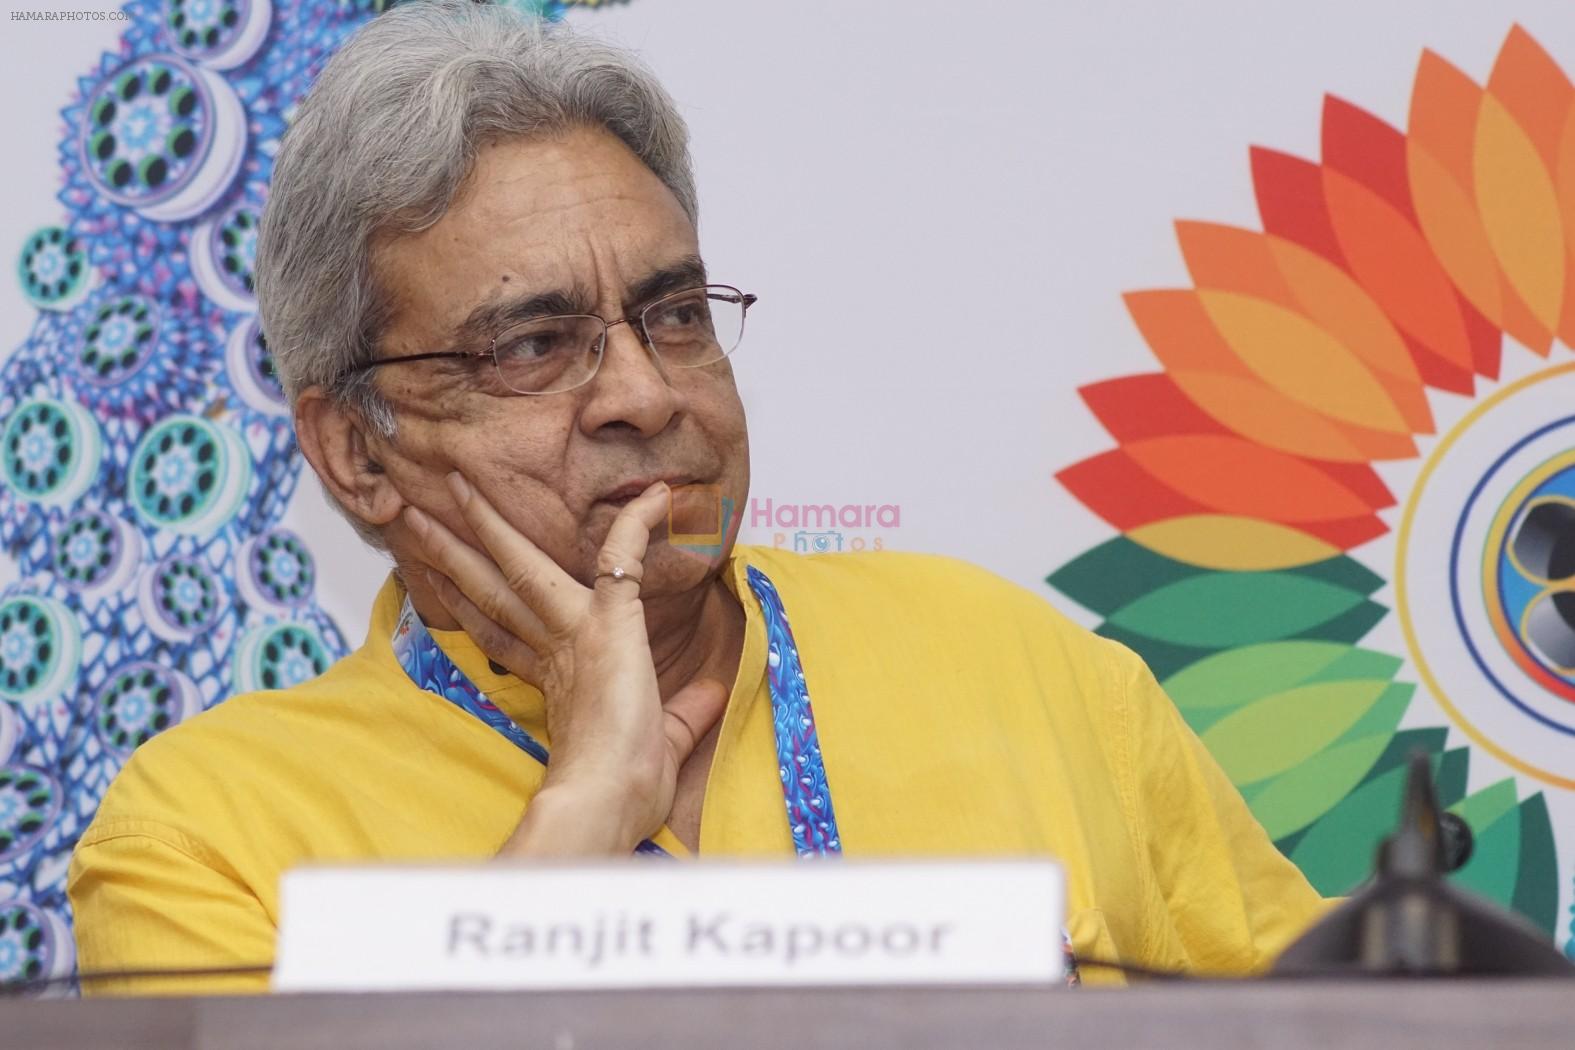 Ranjit Kapoor At IFFI 17 on 23rd Nov 2017